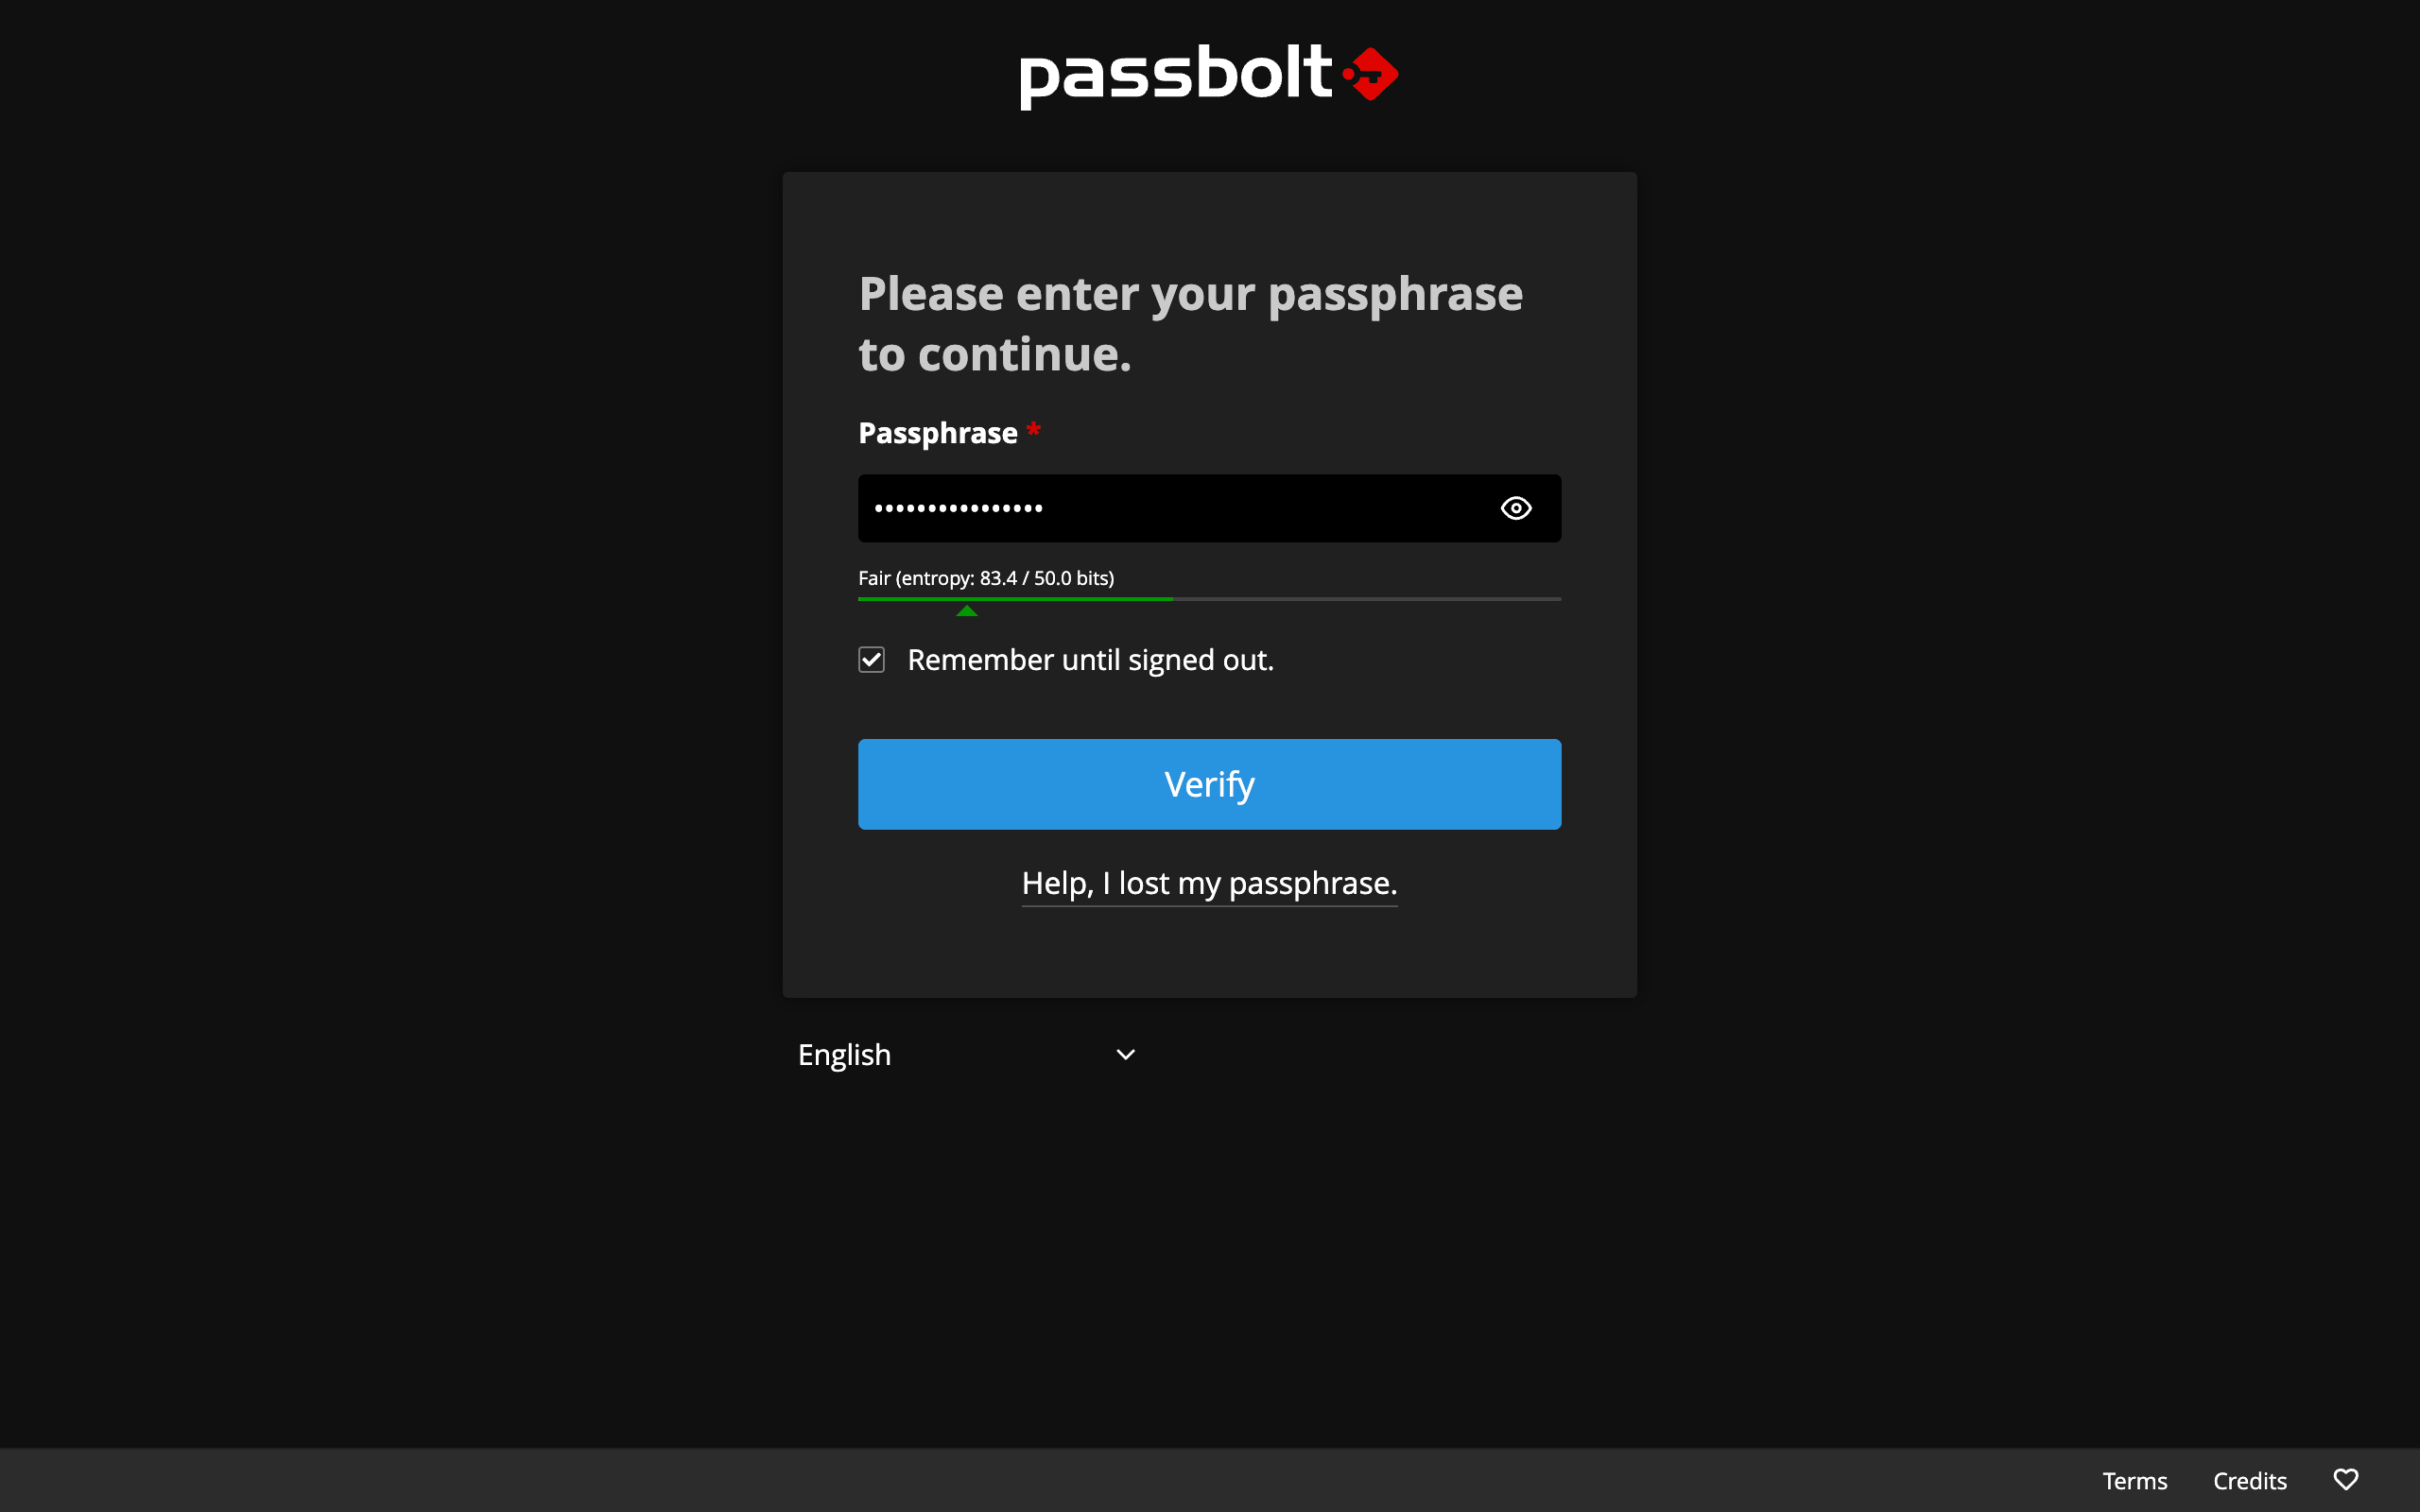 User setup - Enter passphrase